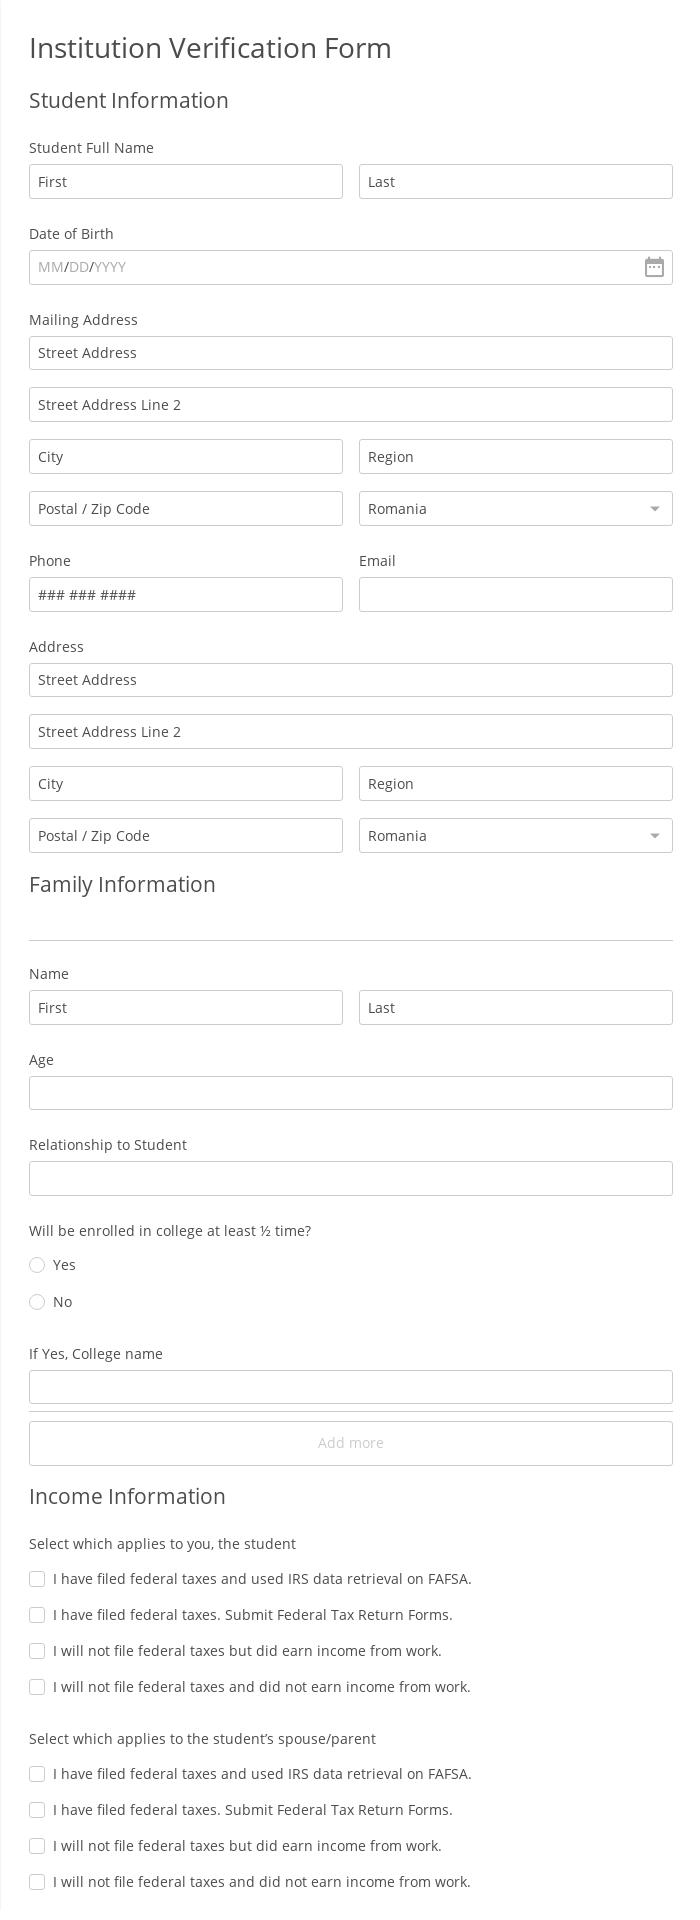 Institution Verification Form